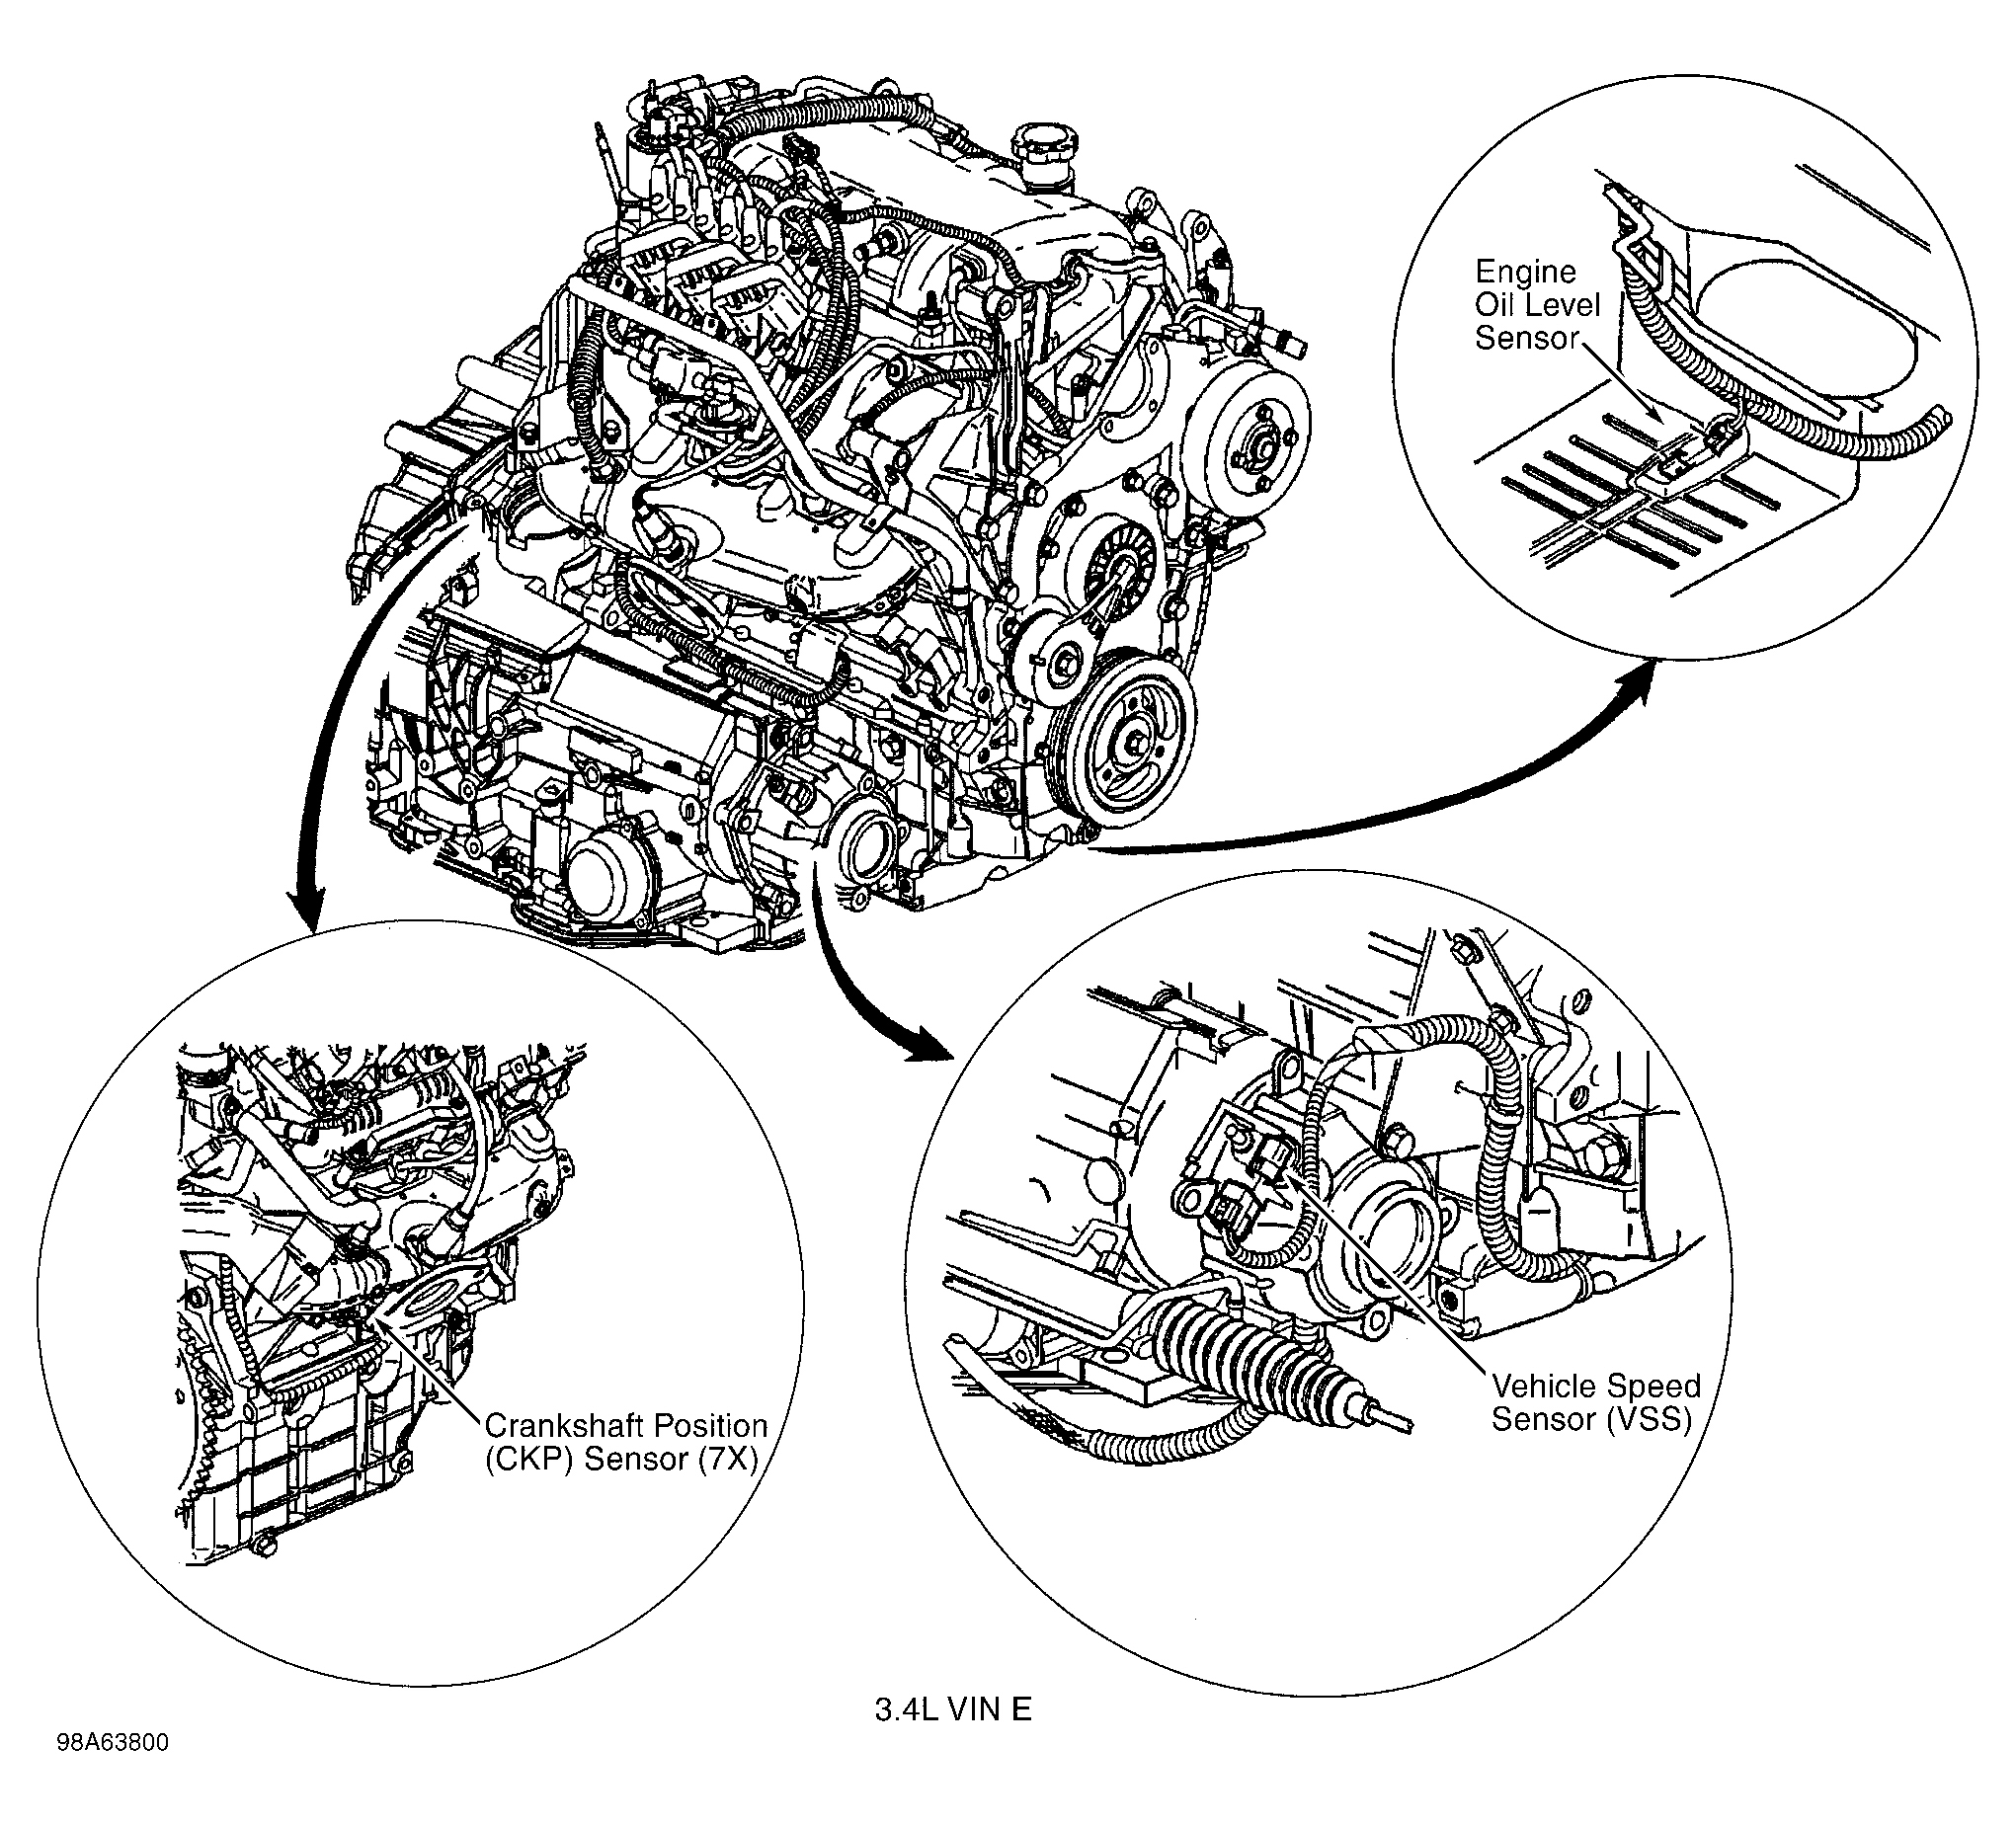 Chevrolet Monte Carlo LS 2001 - Component Locations -  Right Side Of Engine (3.4L VIN E)